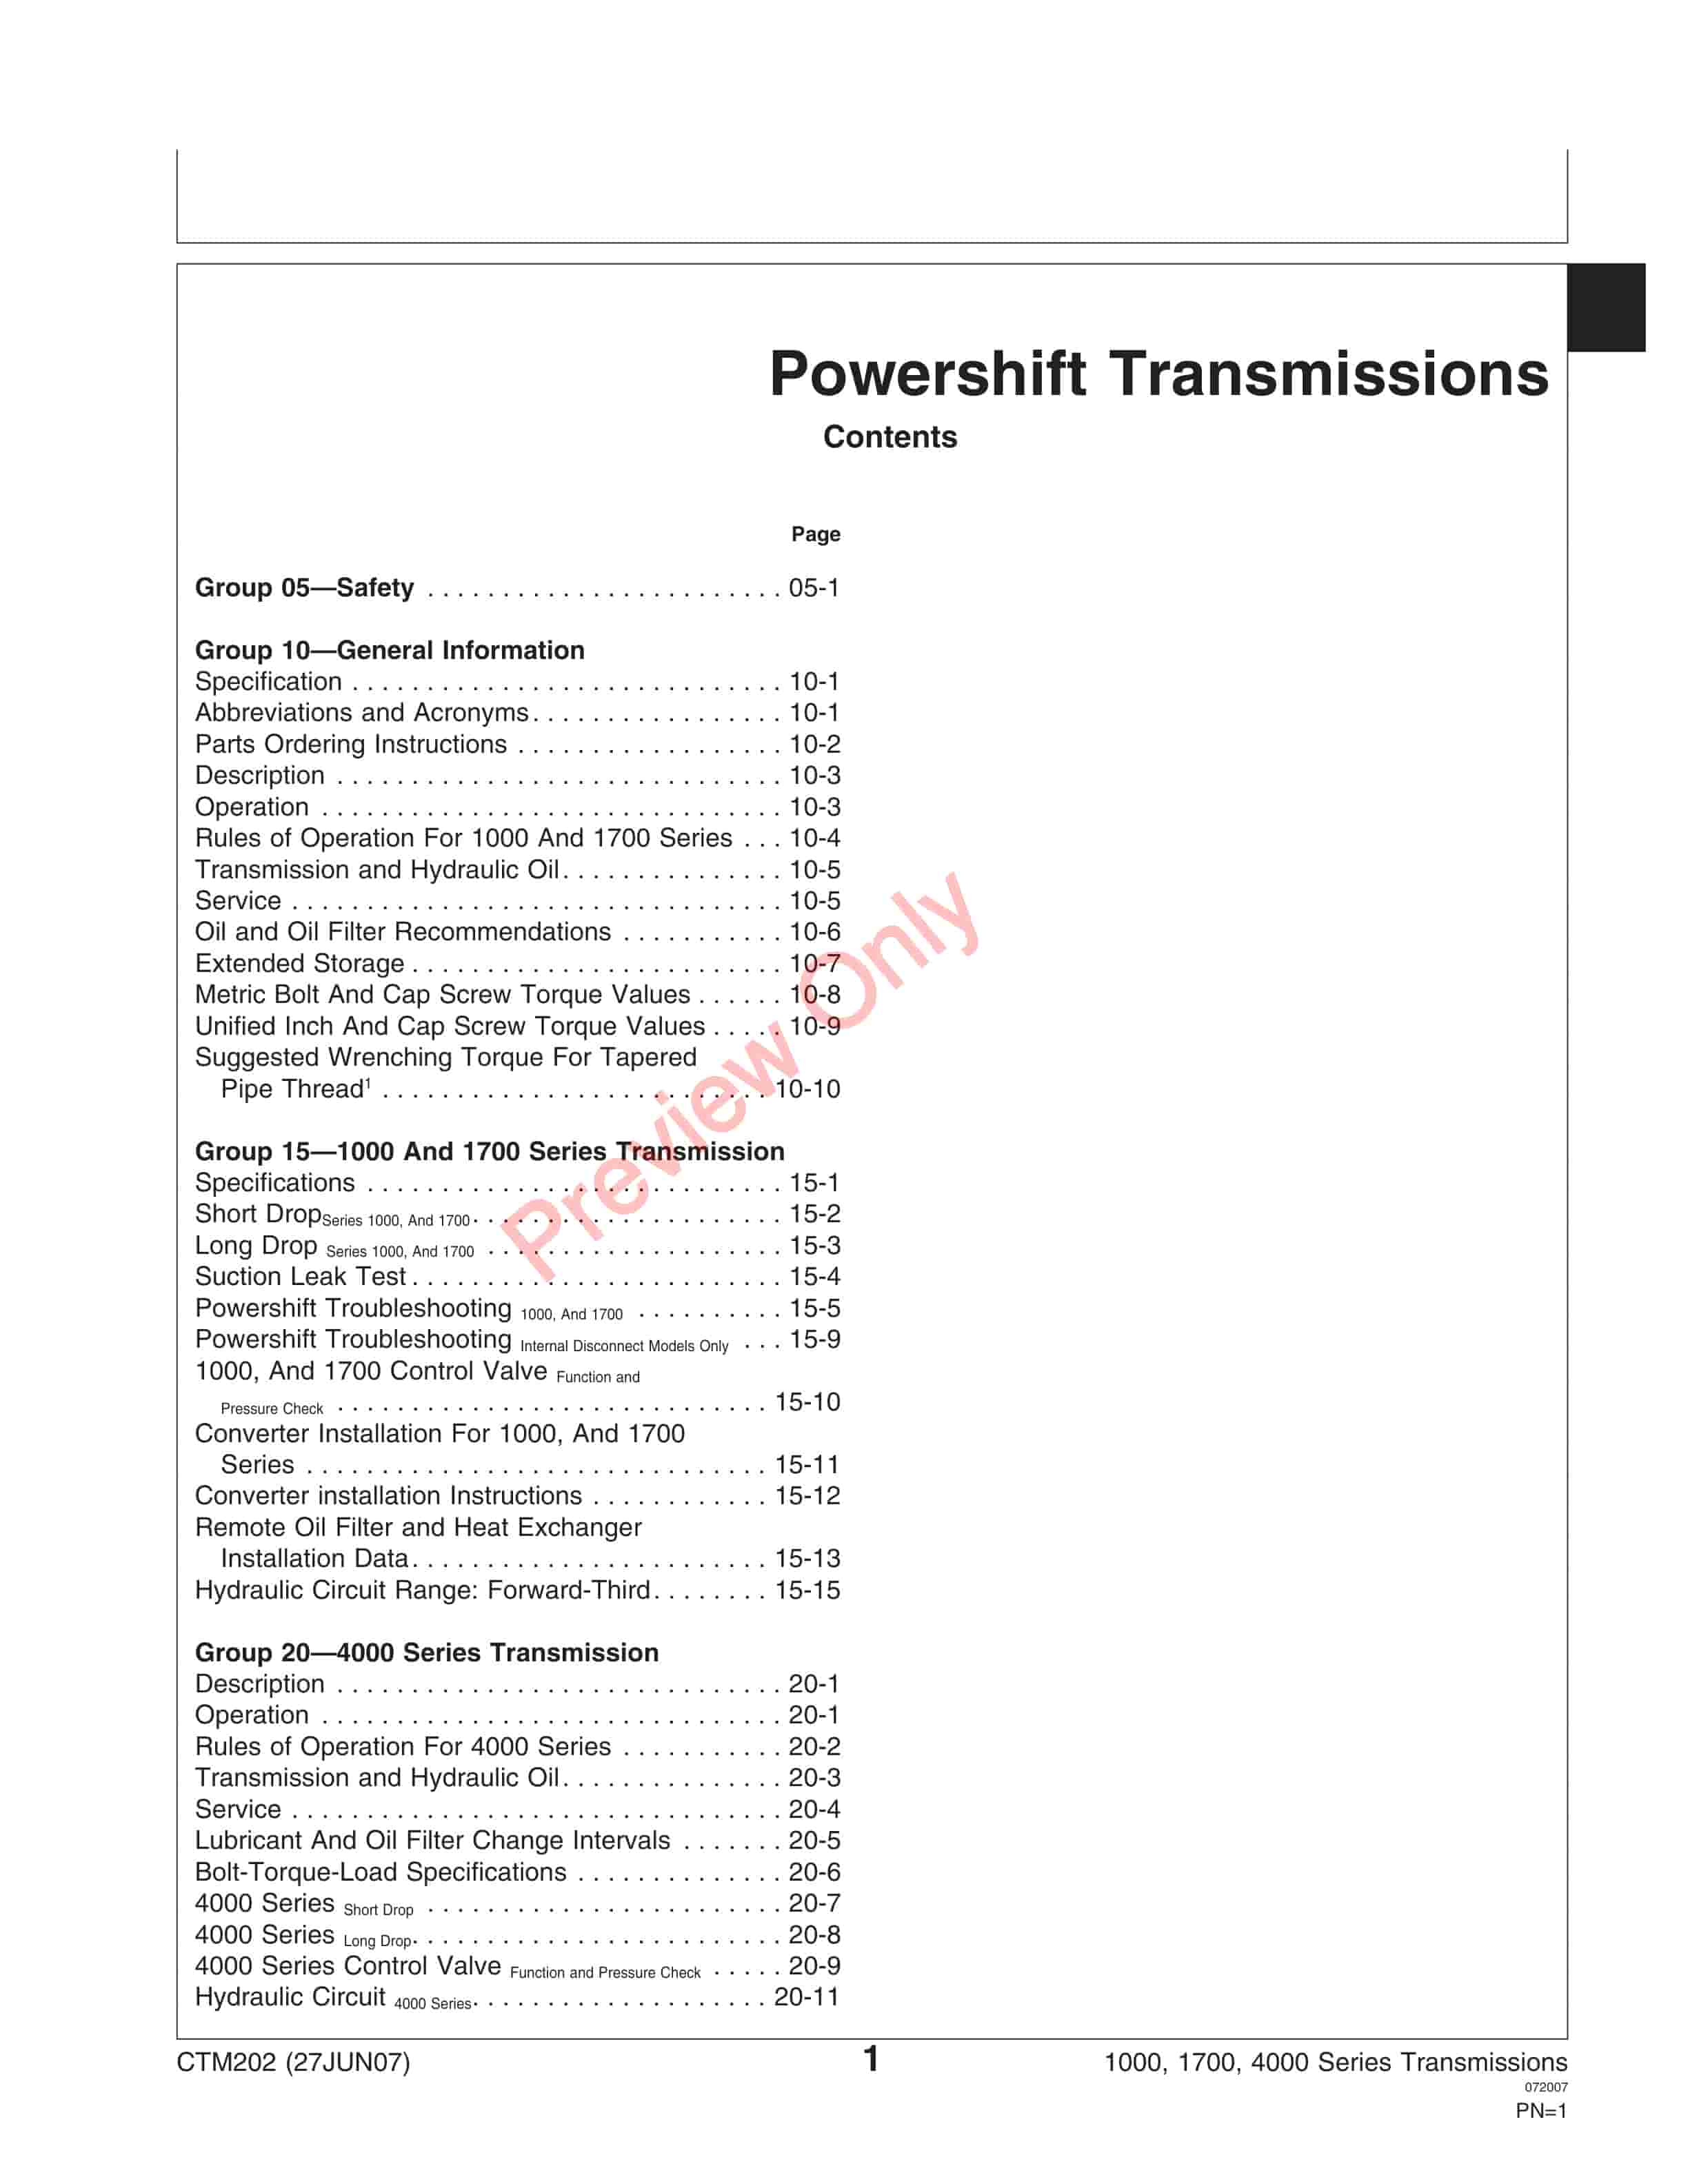 John Deere 1000 1700 And 4000 Series Long And Short Drop Powershift Transmission Service Information CTM202 27JUN07 5